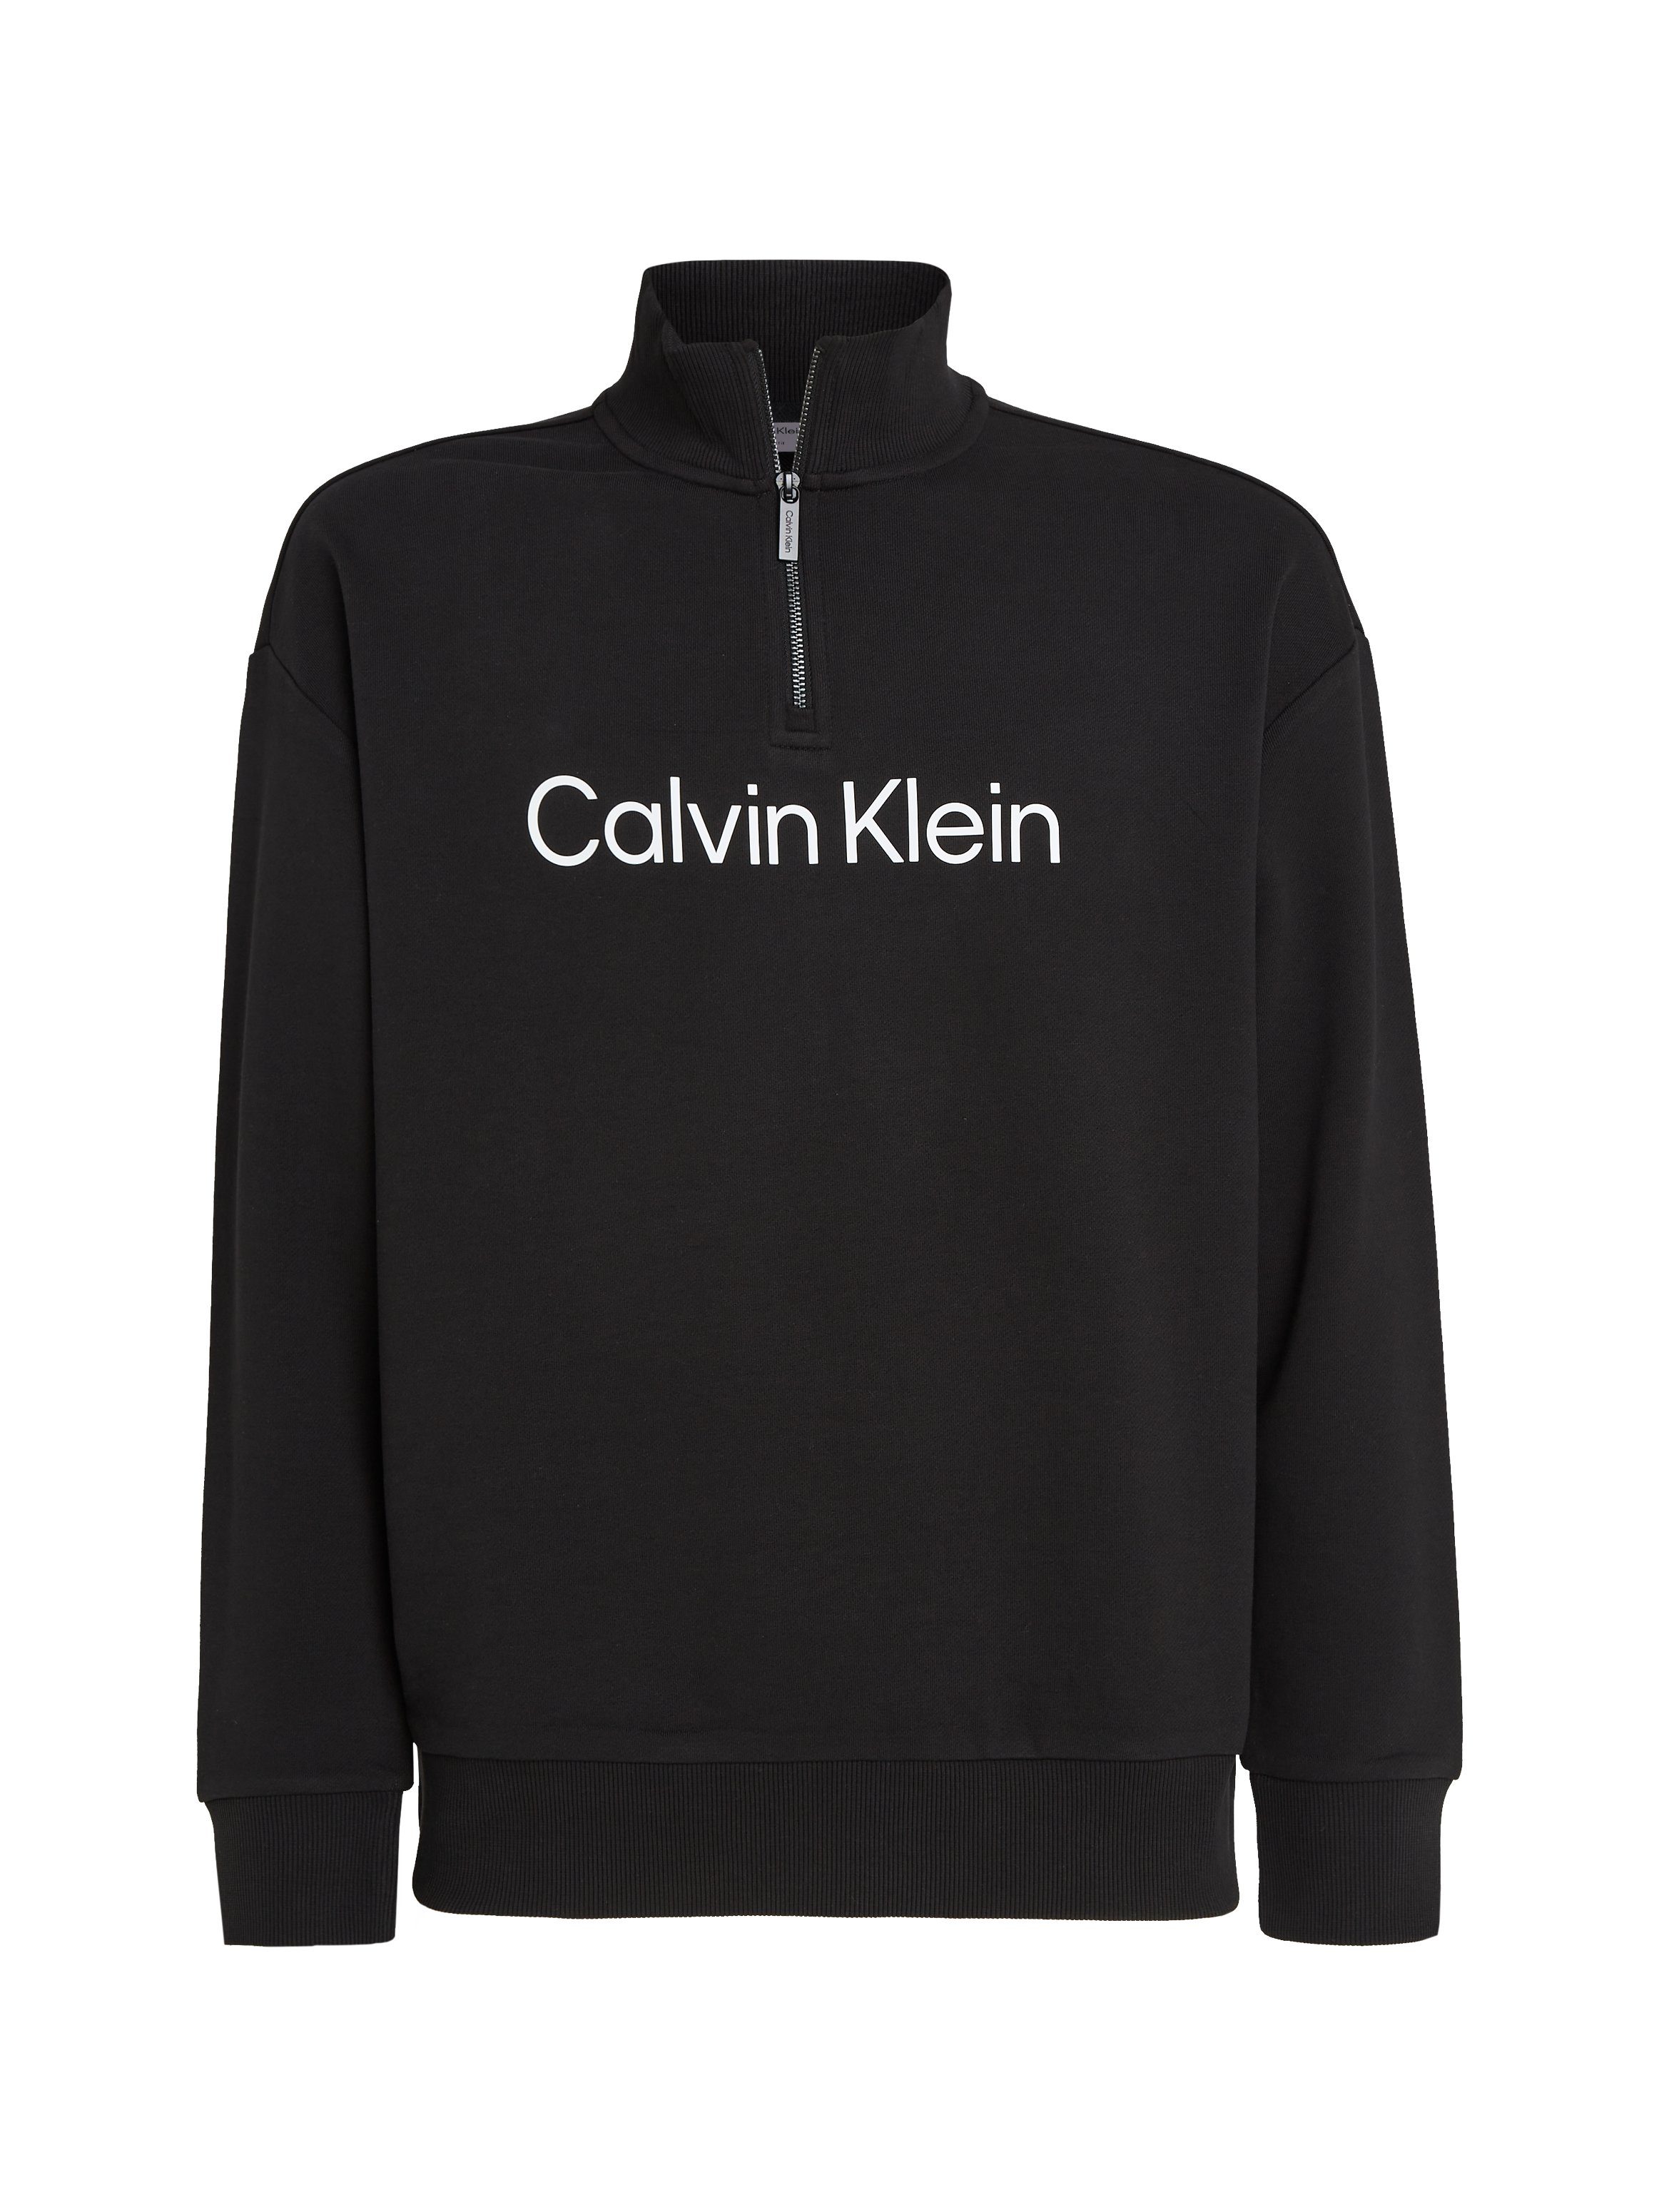 Calvin Klein Sweatshirt HERO Kragen Reißverschluss am ZIP mit COMFORT LOGO QUARTER